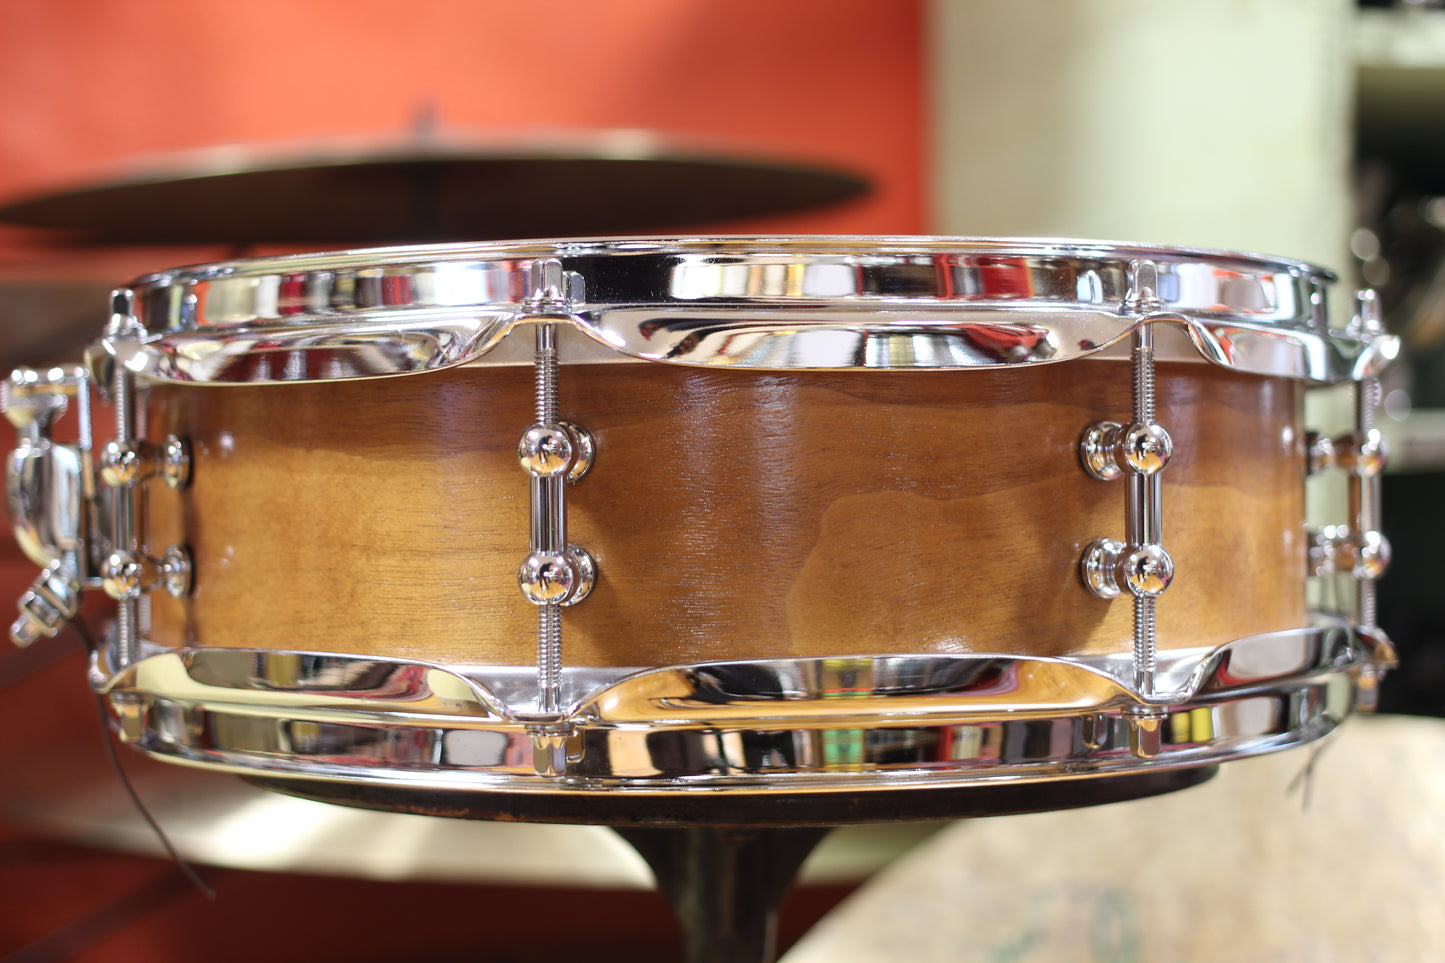 Standard Drum Company 4"x12" Snare Drum in Walnut Gloss